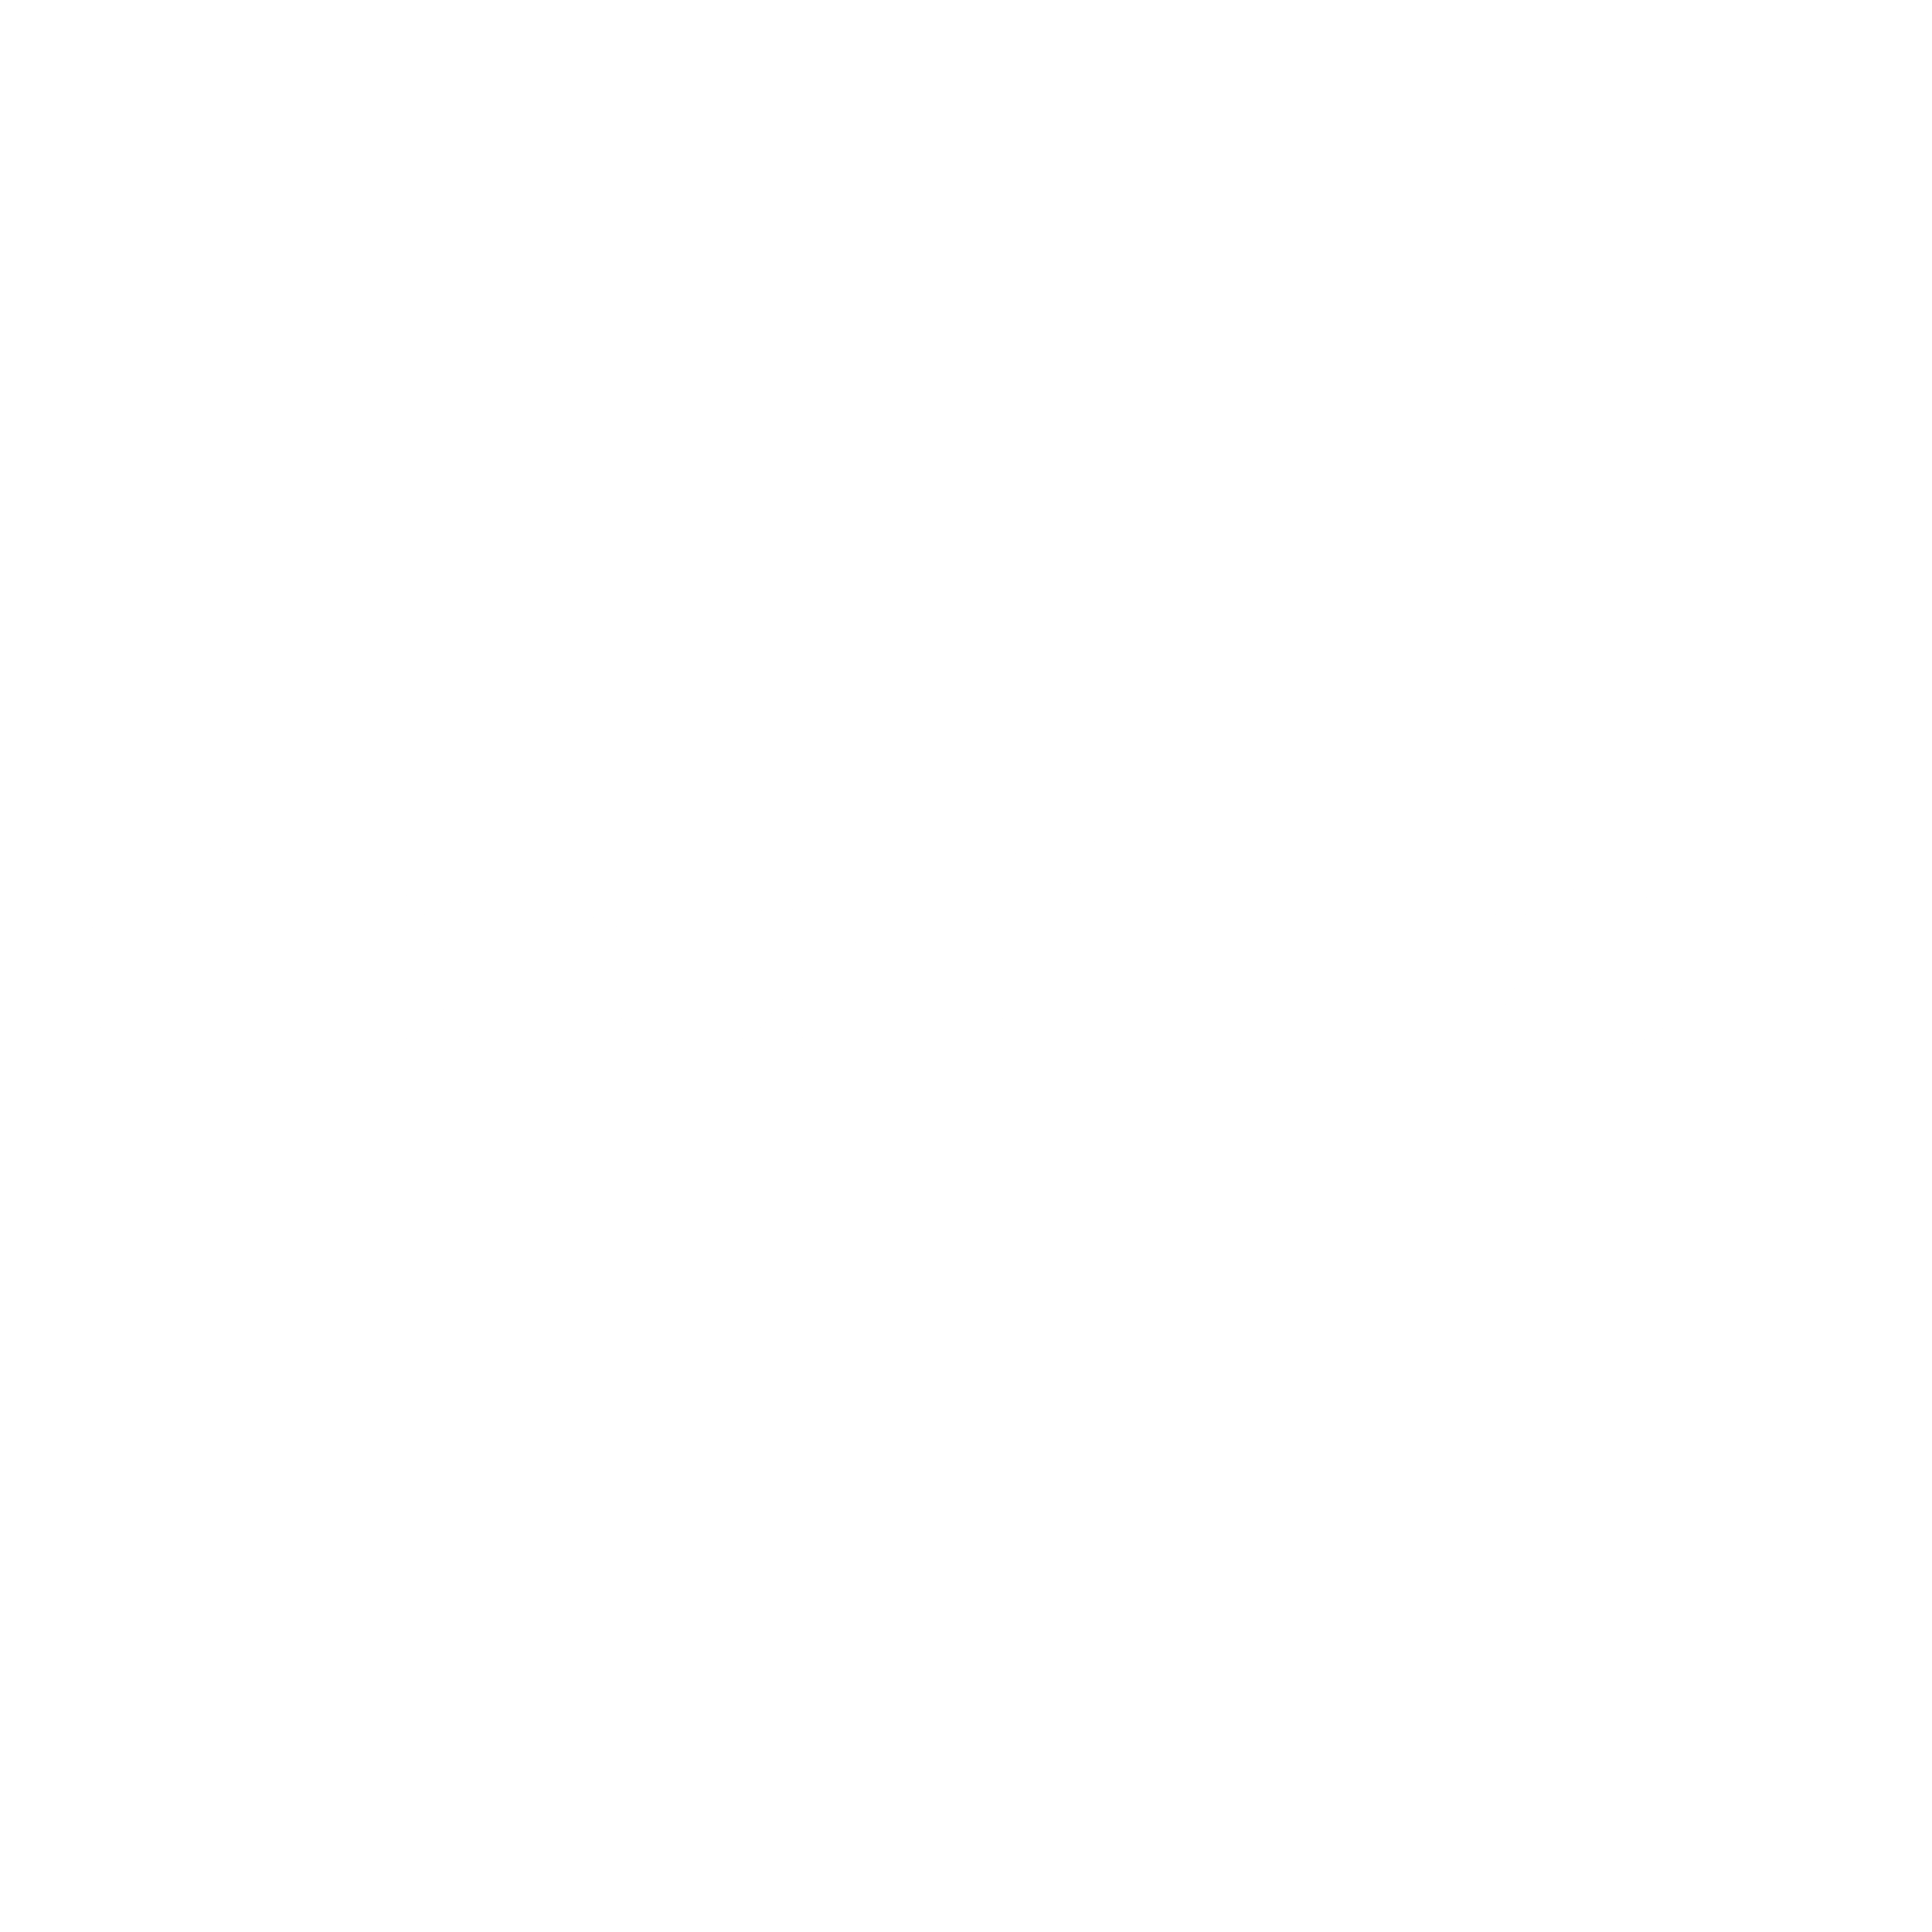 Speed Queen Logo PNG Transparent & SVG Vector.